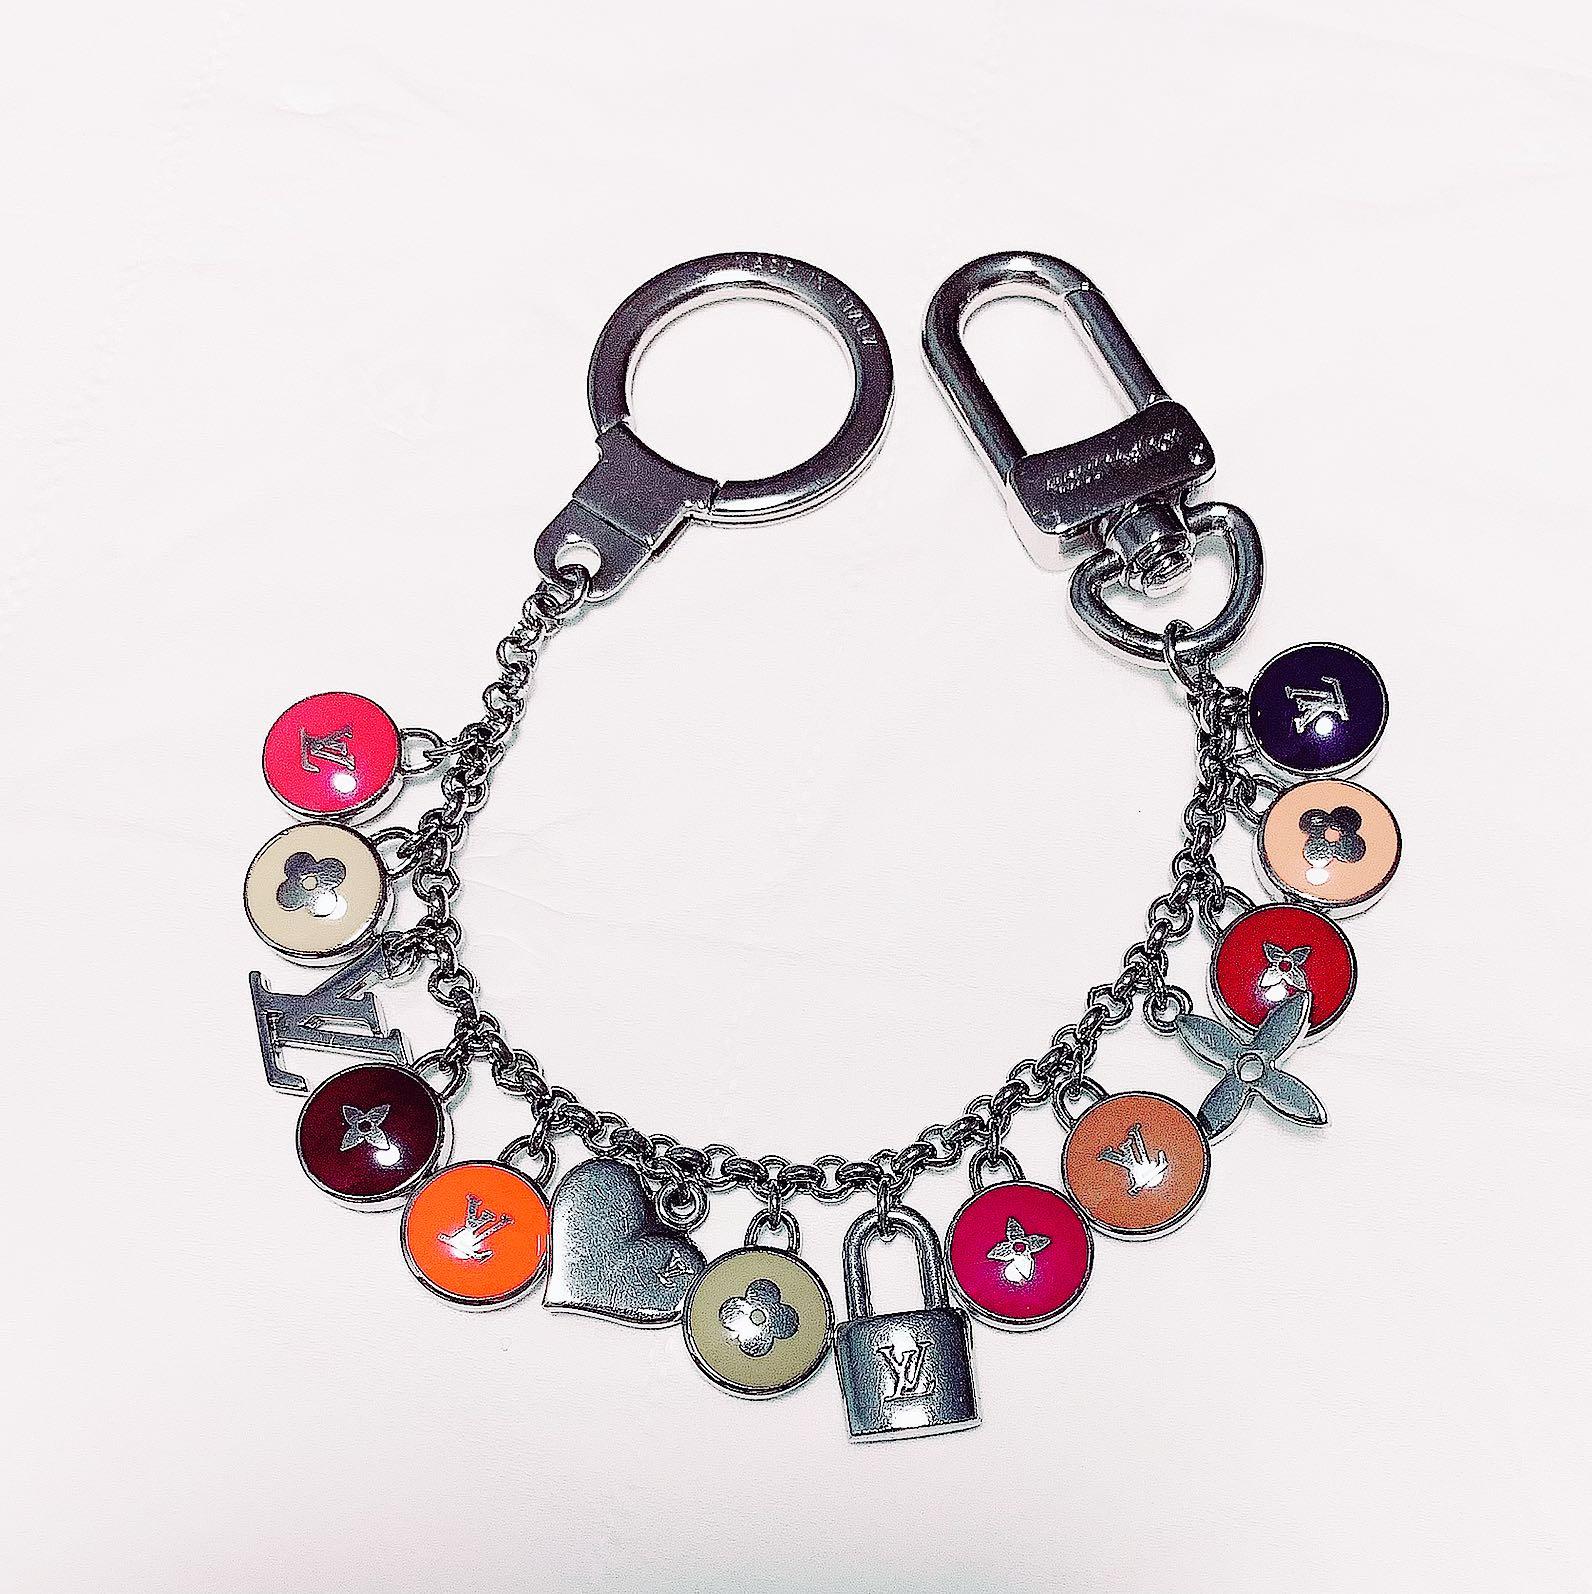 LOUIS VUITTON Monogram Multicolor Looping Charm Bracelet 243518